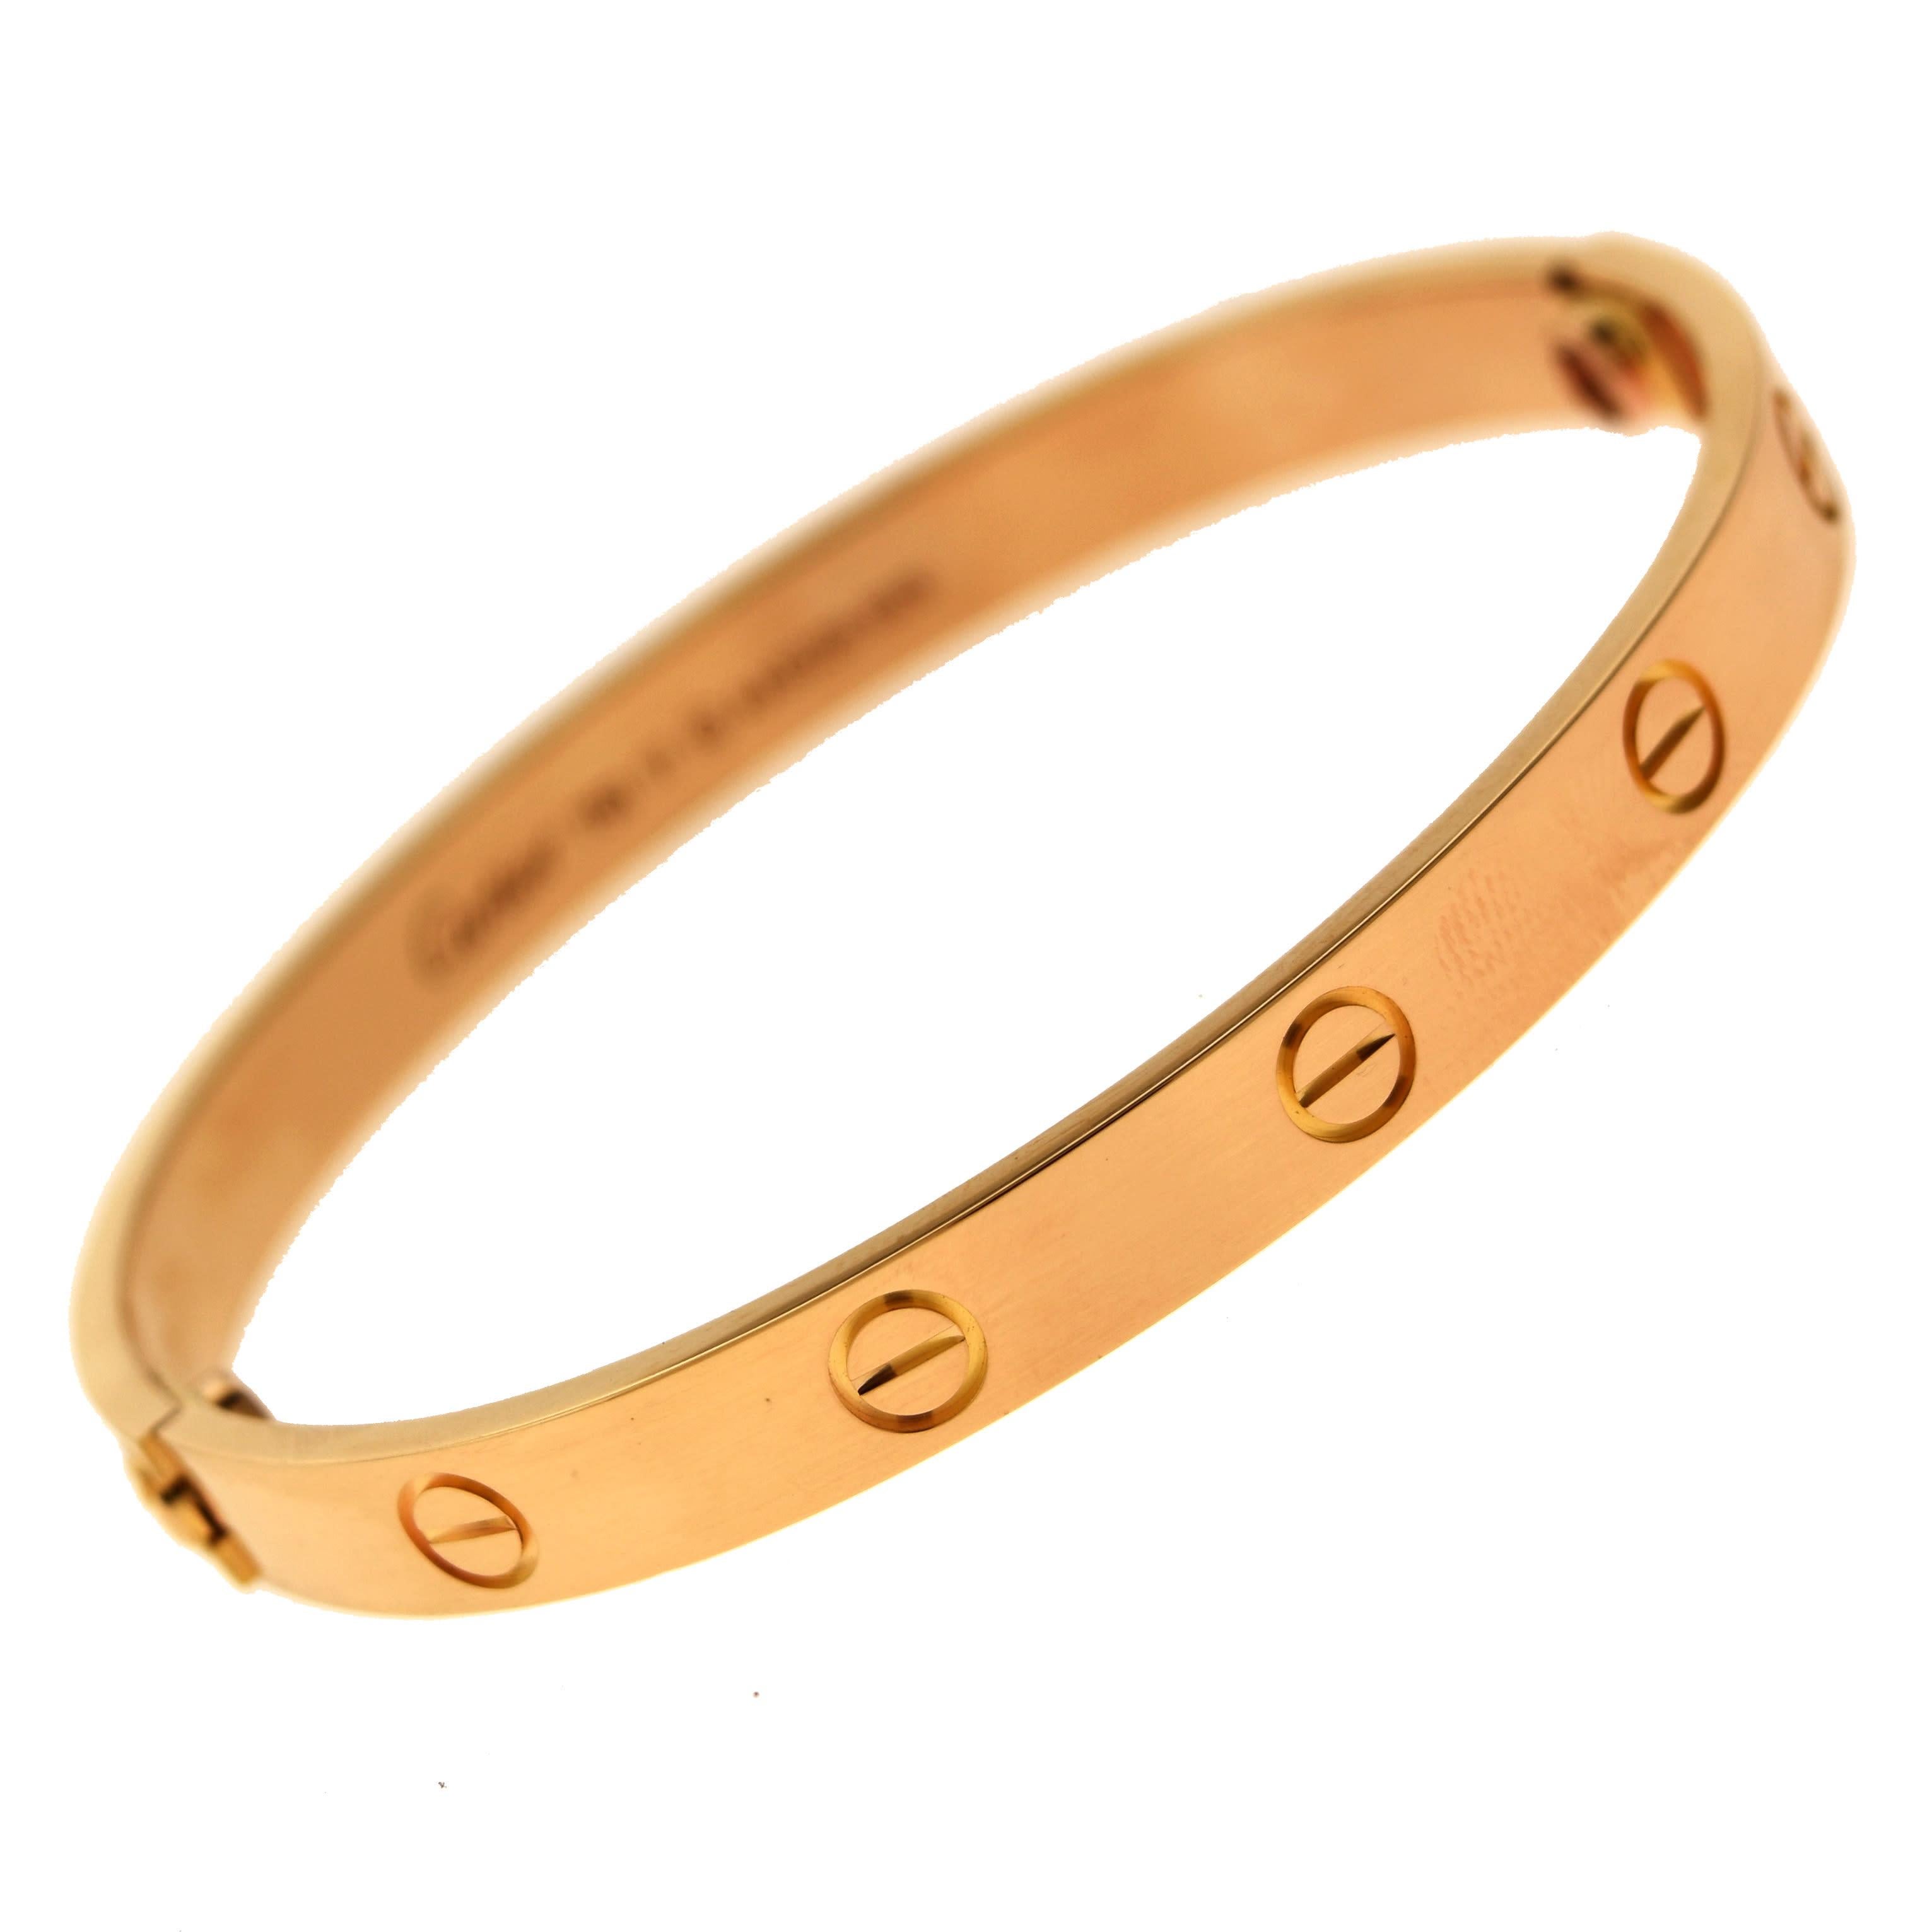 Designer: Cartier

Collection: Love

Style: Bracelet/ Bangle

Metal: Rose Gold

Metal Purity: 18k

Bracelet Size: 17 = 17 cm

Hallmark:  Cartier;750, Serial No. 17

Includes: 24 Month Brilliance Jewels Warranty

                     Cartier Box,